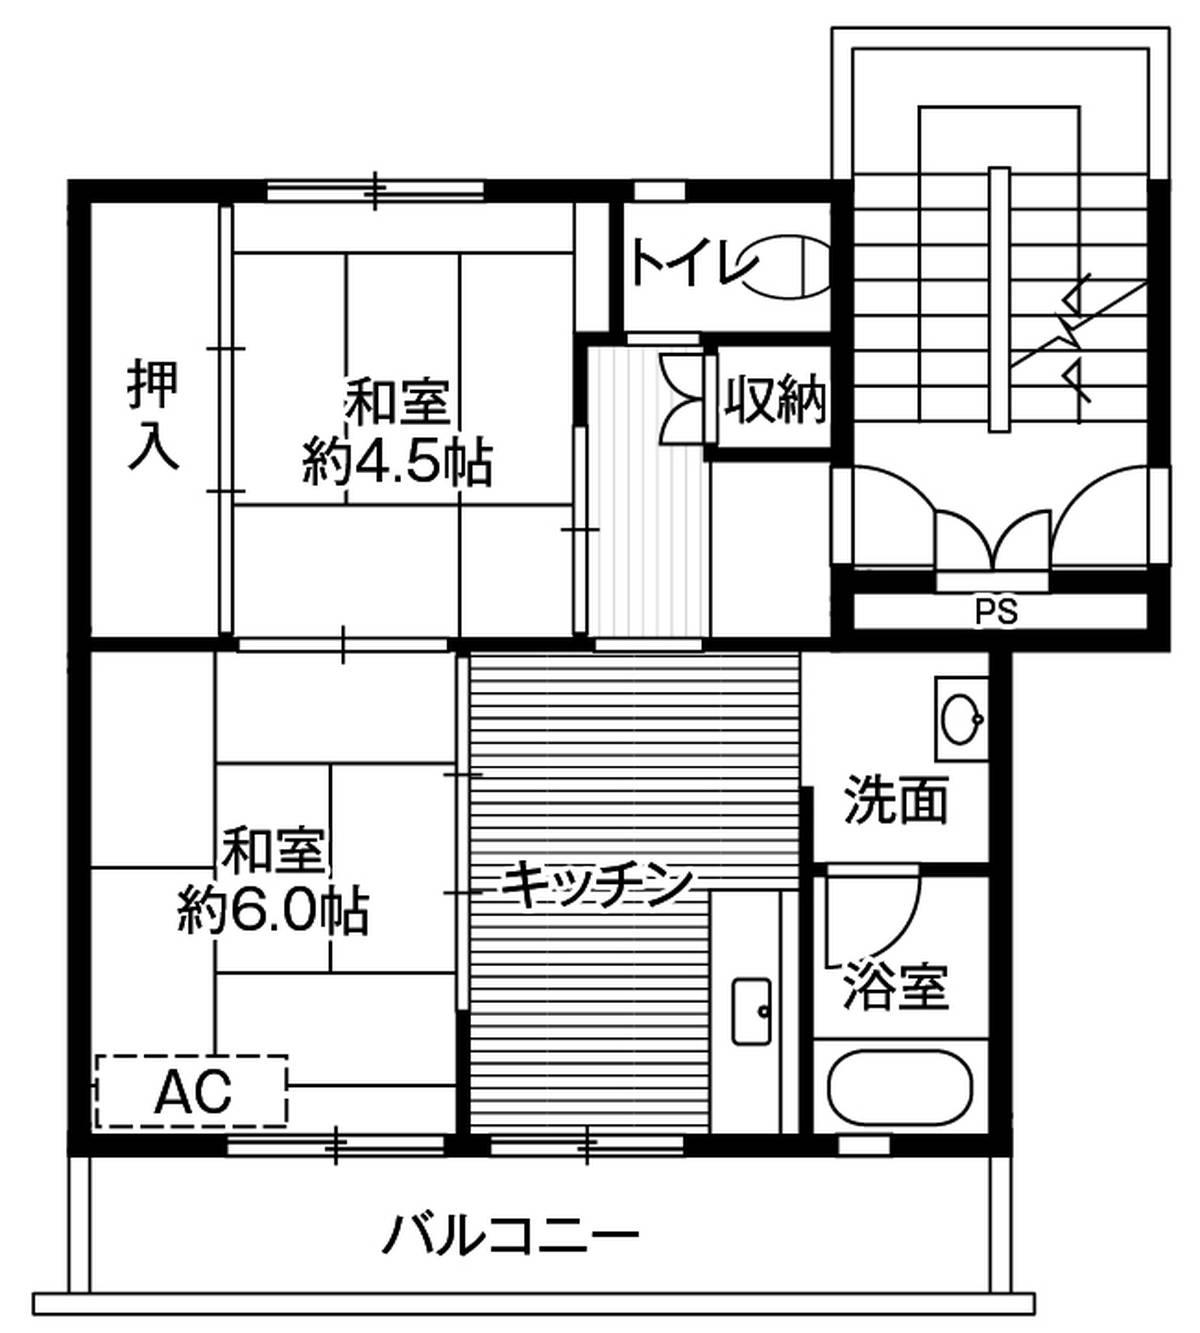 2DK floorplan of Village House Waga in Kitakami-shi